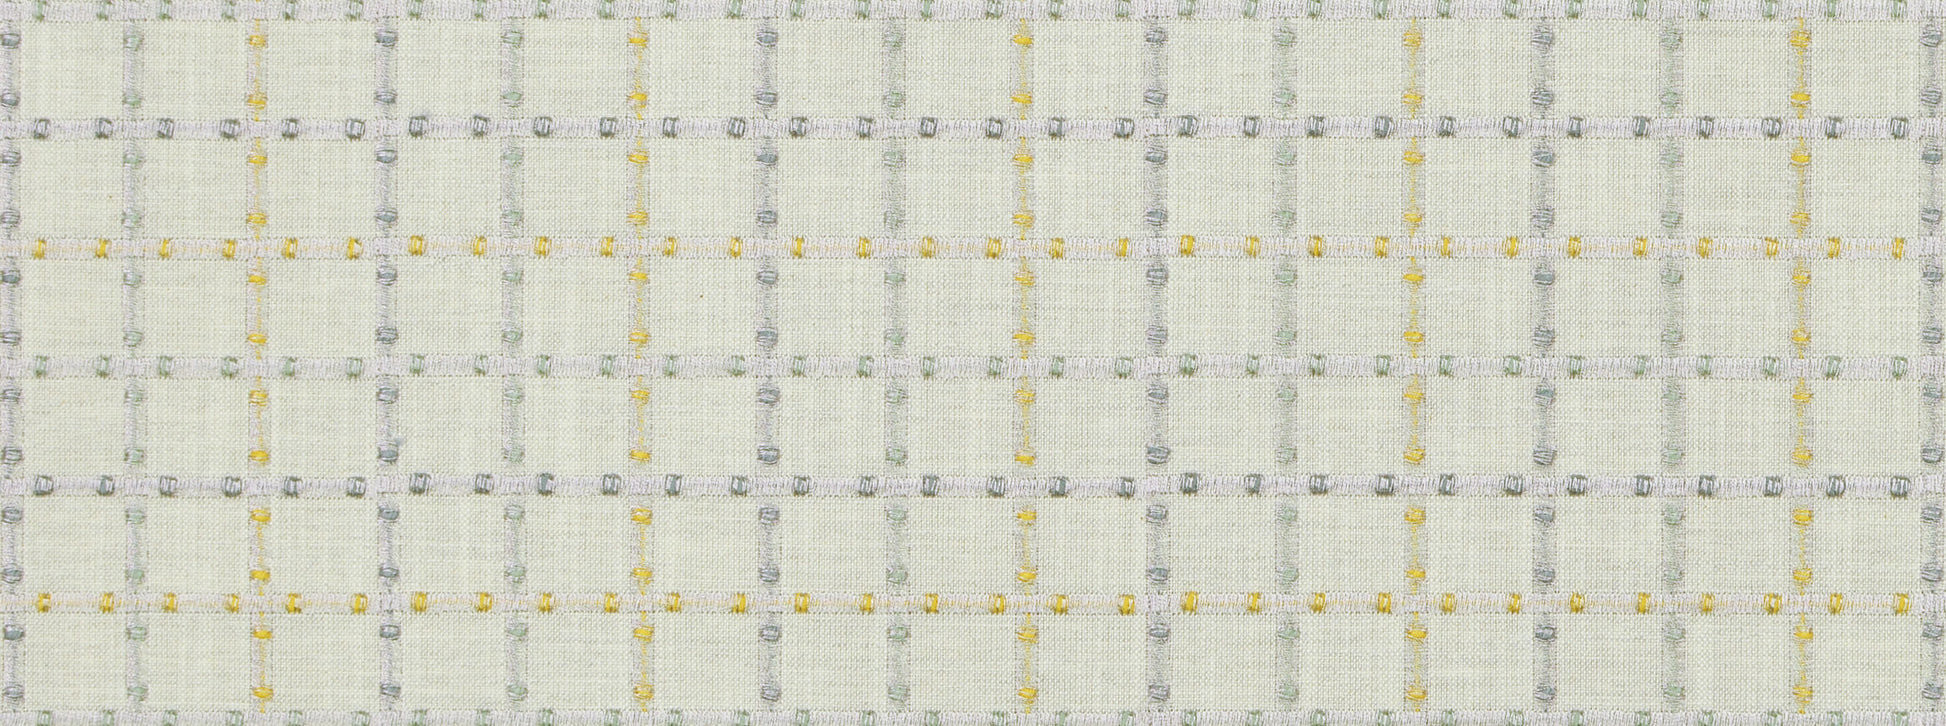 Mid-century modern drapery fabric